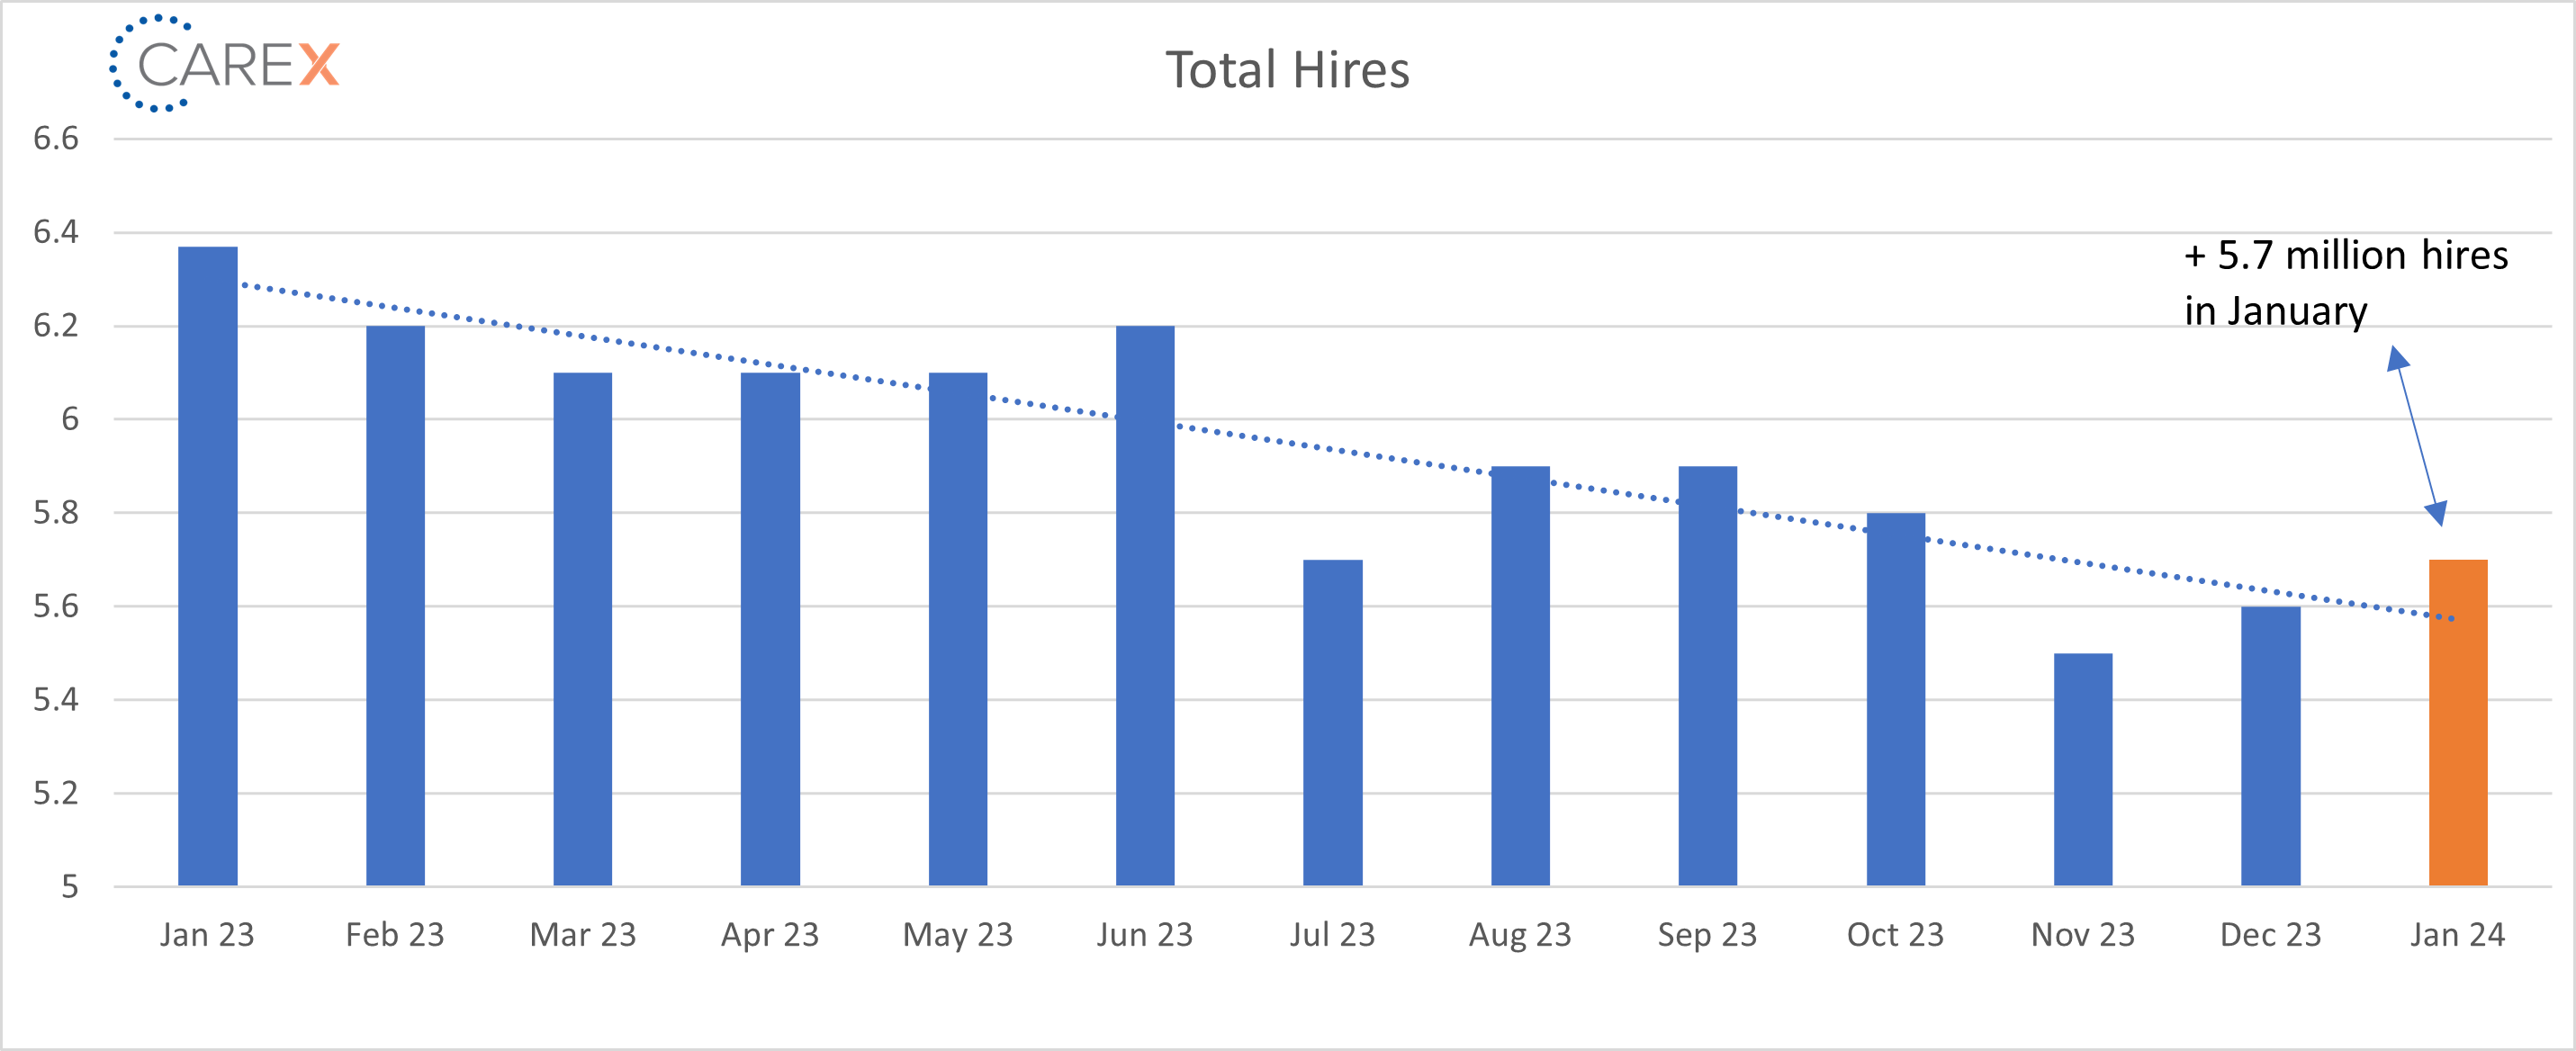 5.7 million hires in Jan